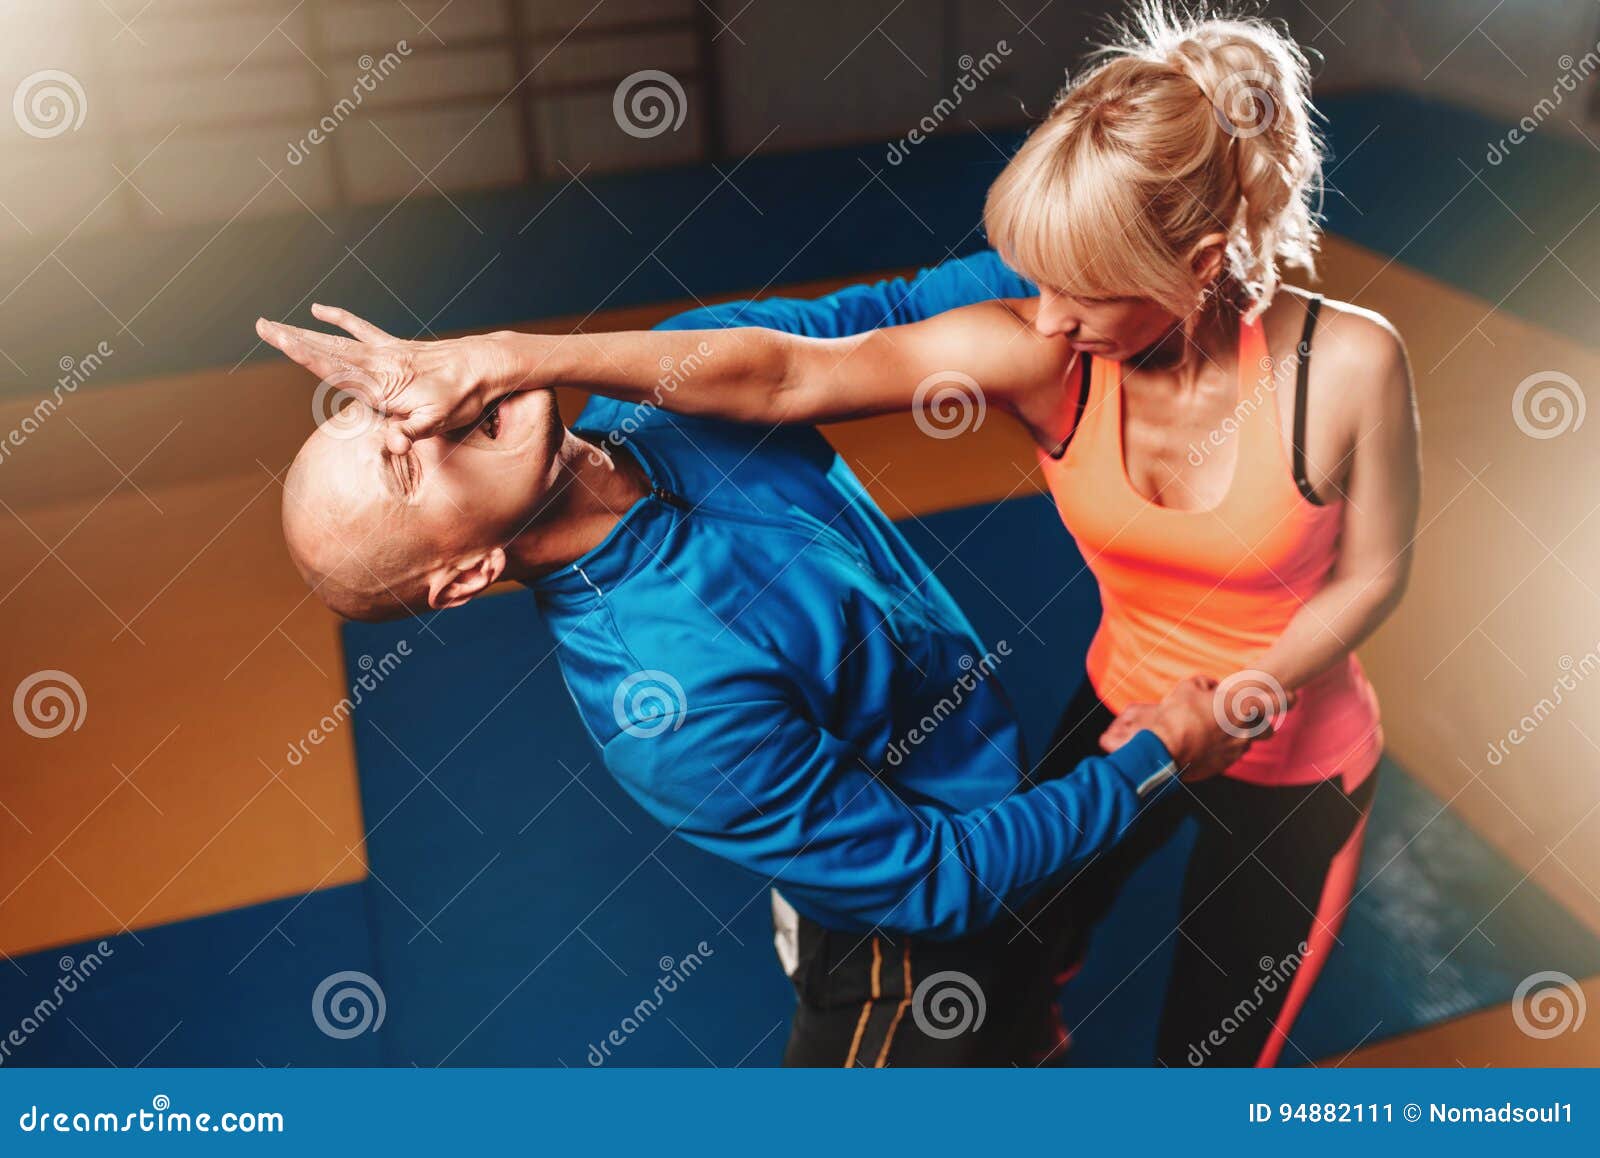 women self defense technique, martial art